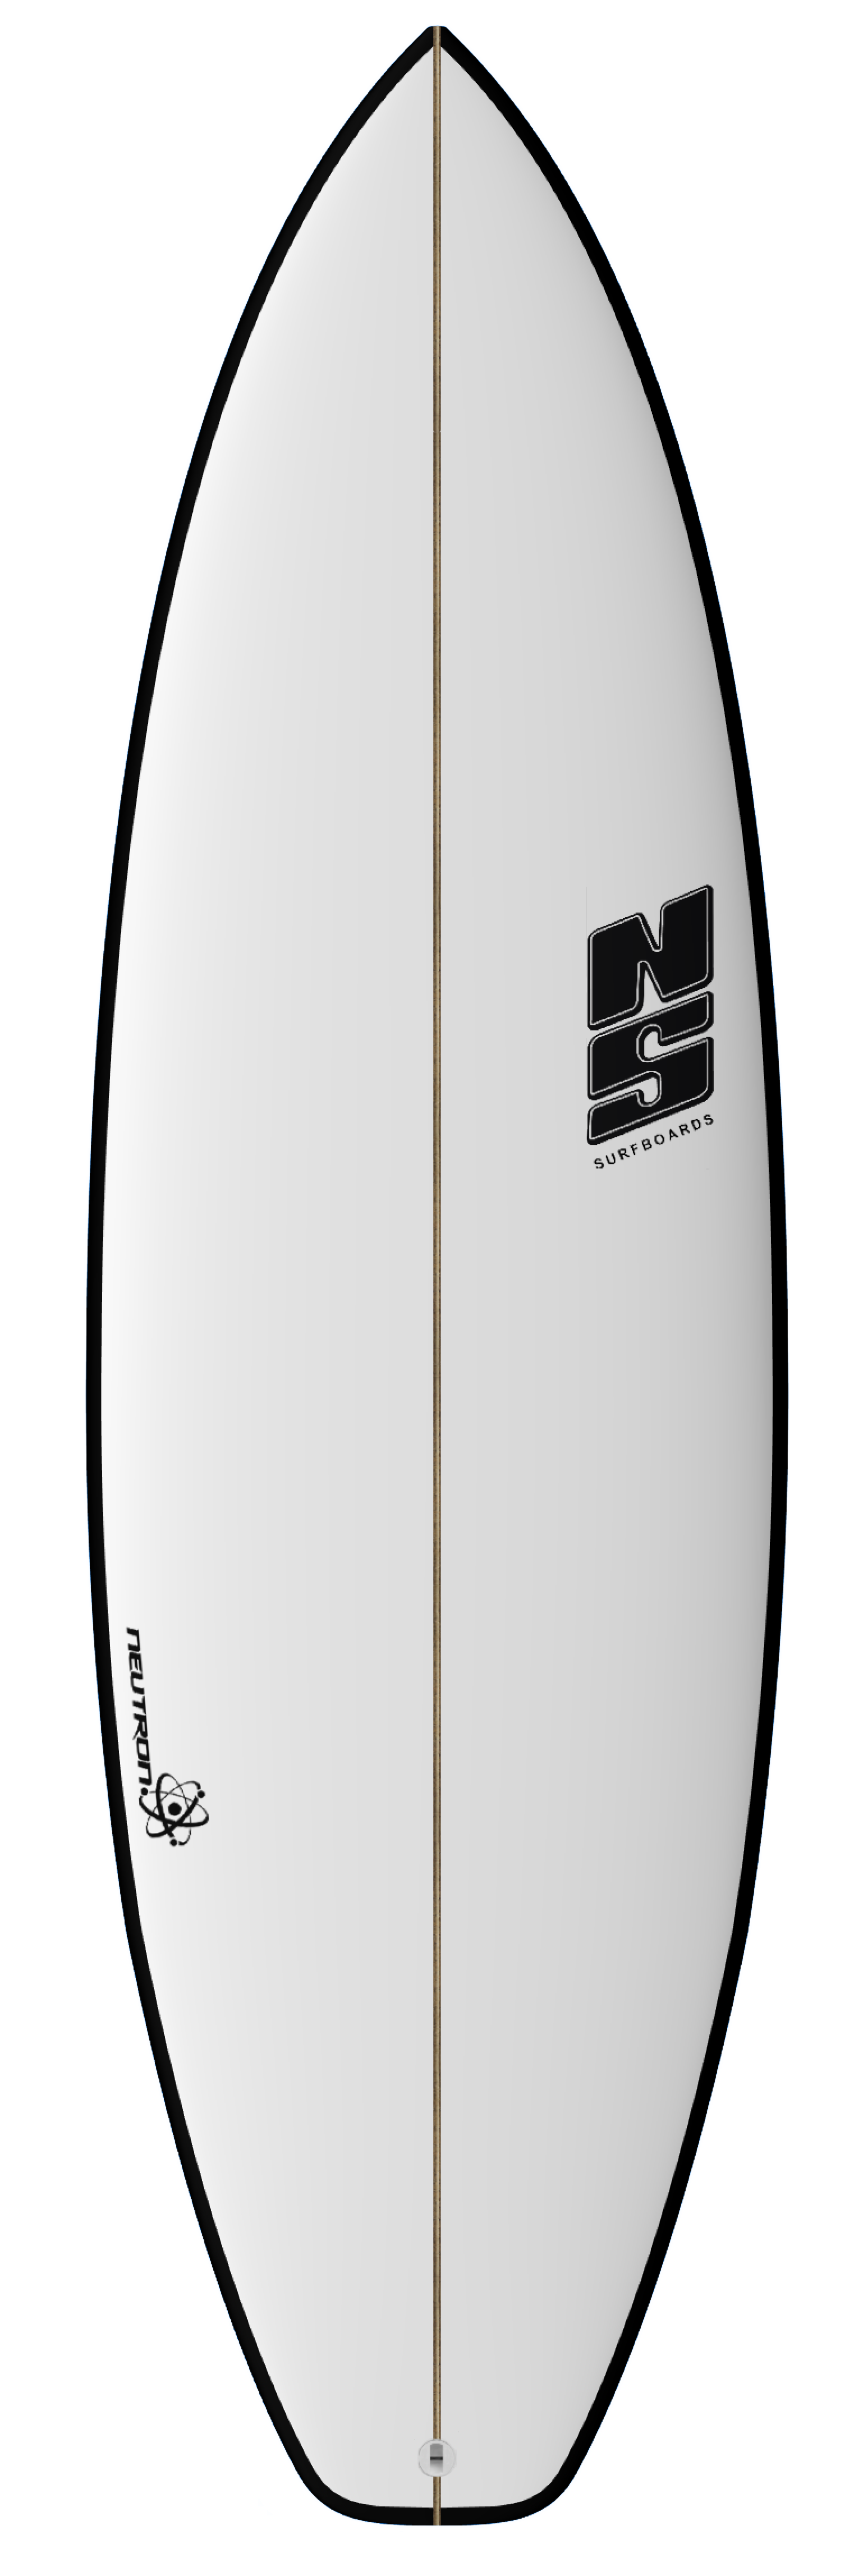 nigel semmens neutron surfboard in white with black rails